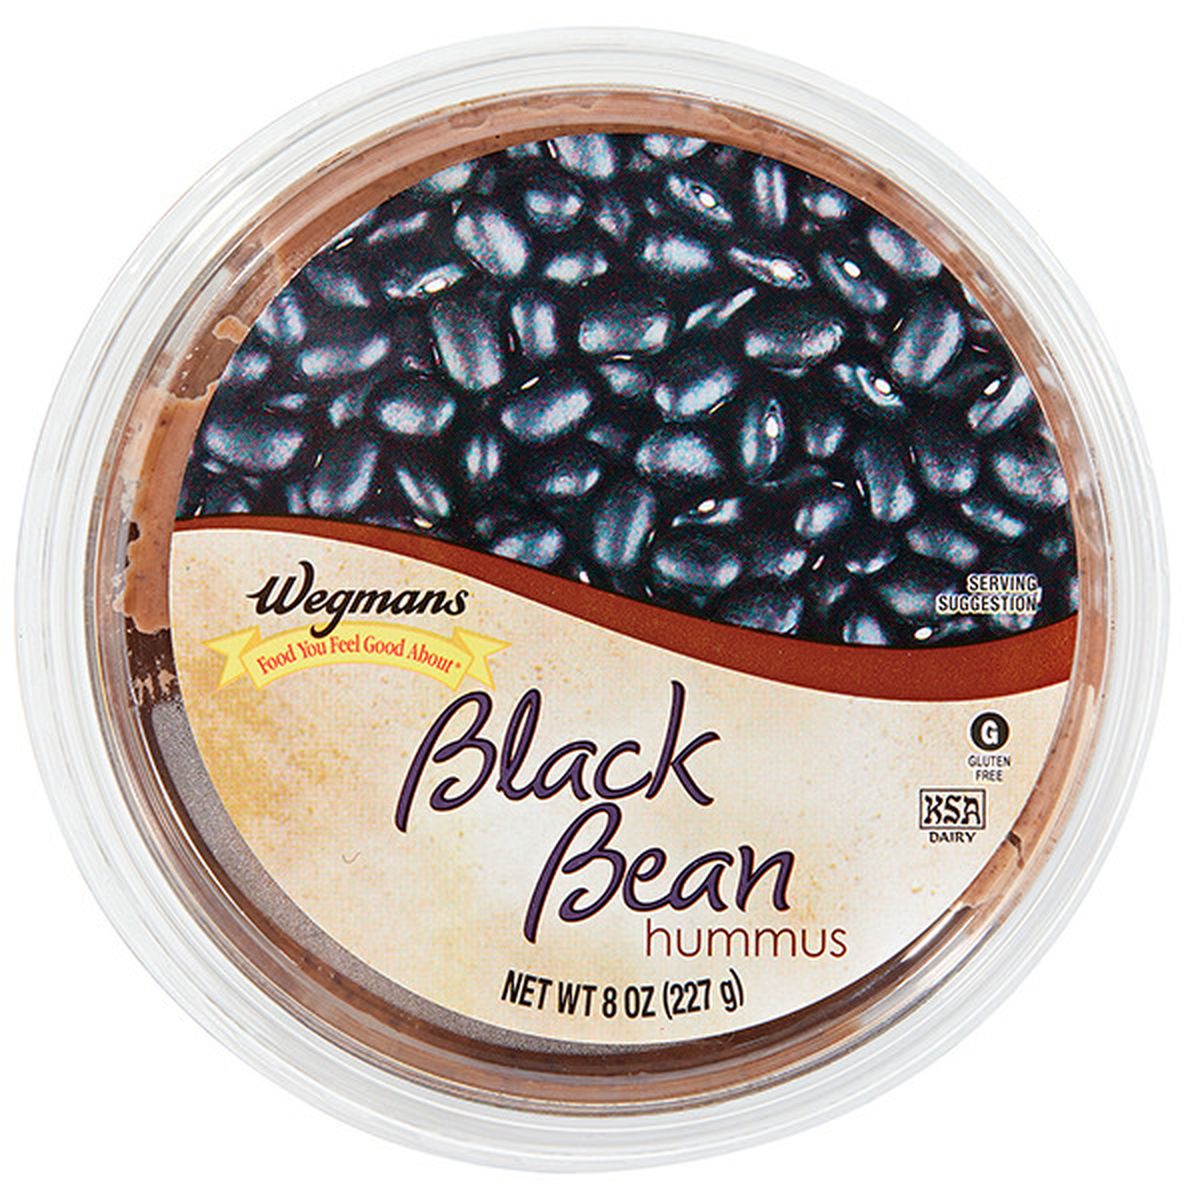 Calories in Wegmans Black Bean Hummus